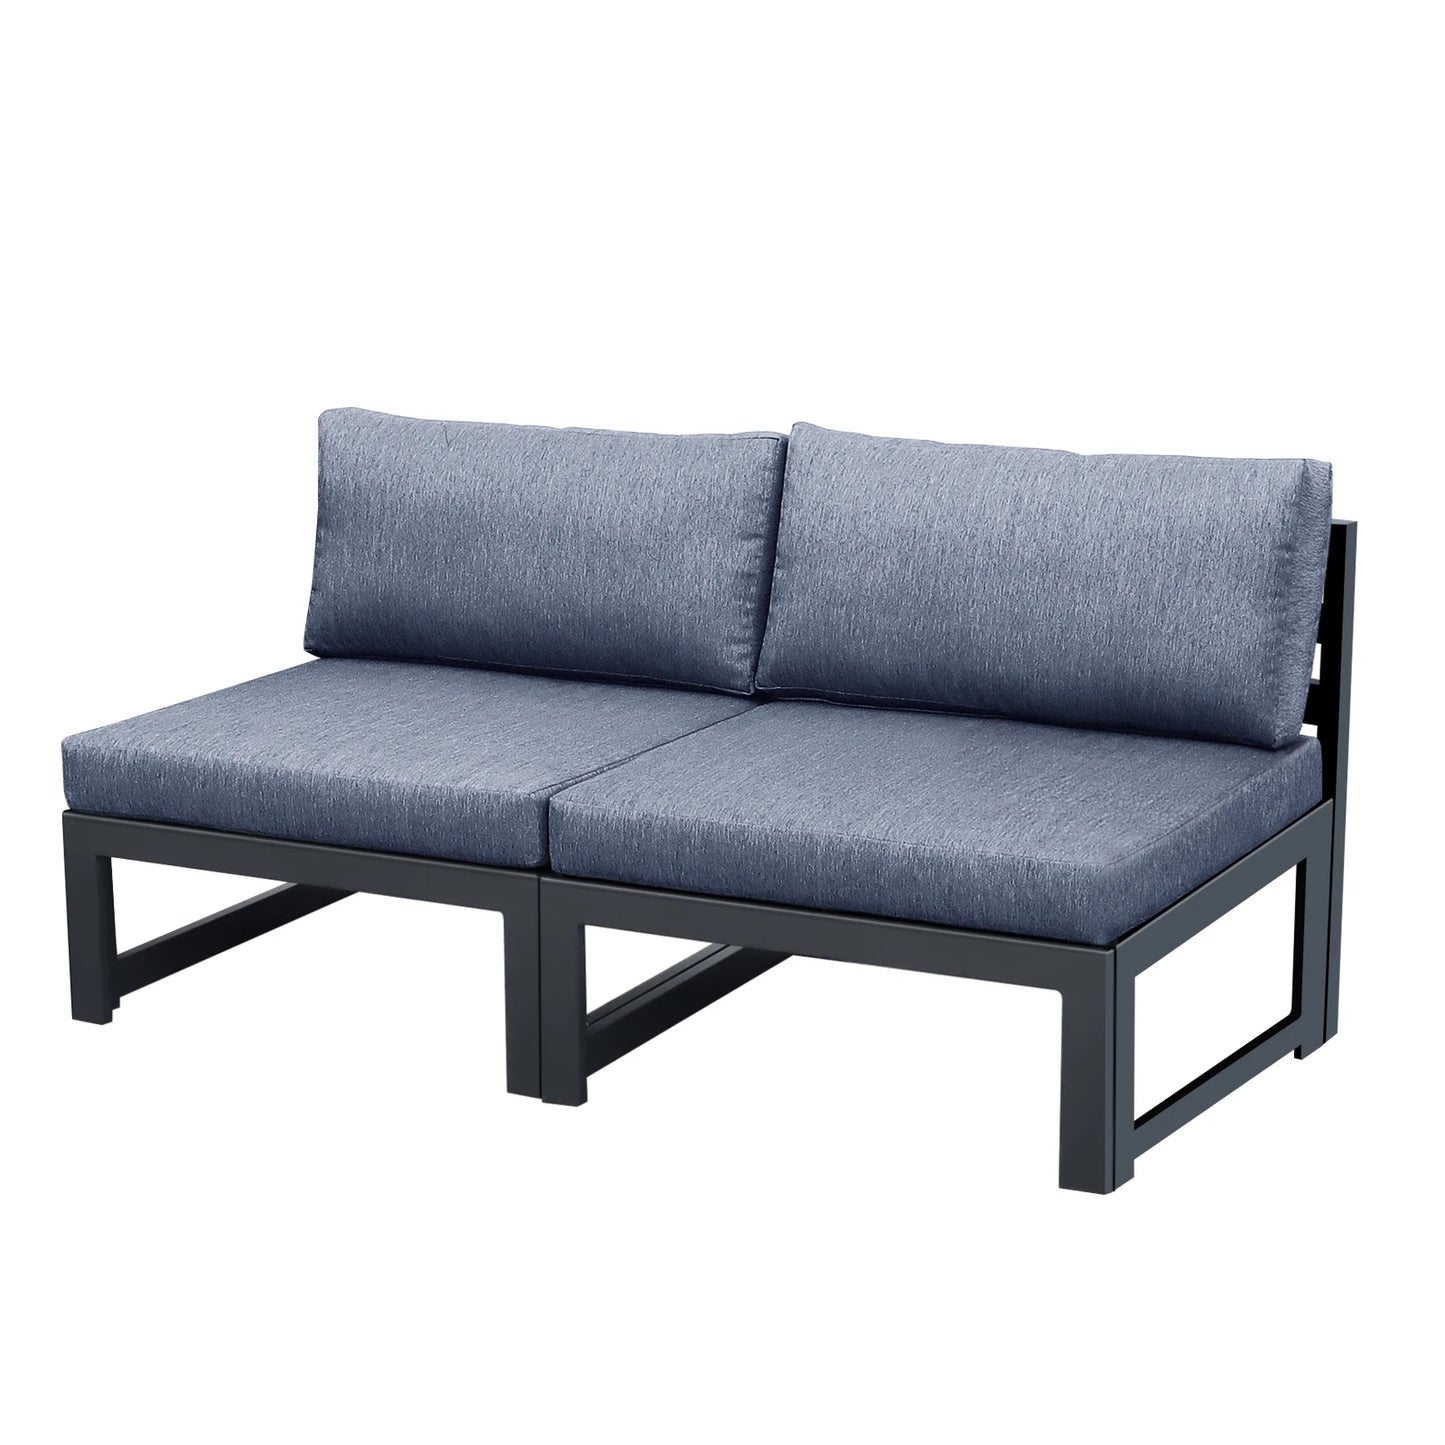 Patio Sectional armless love seat Sofa Set